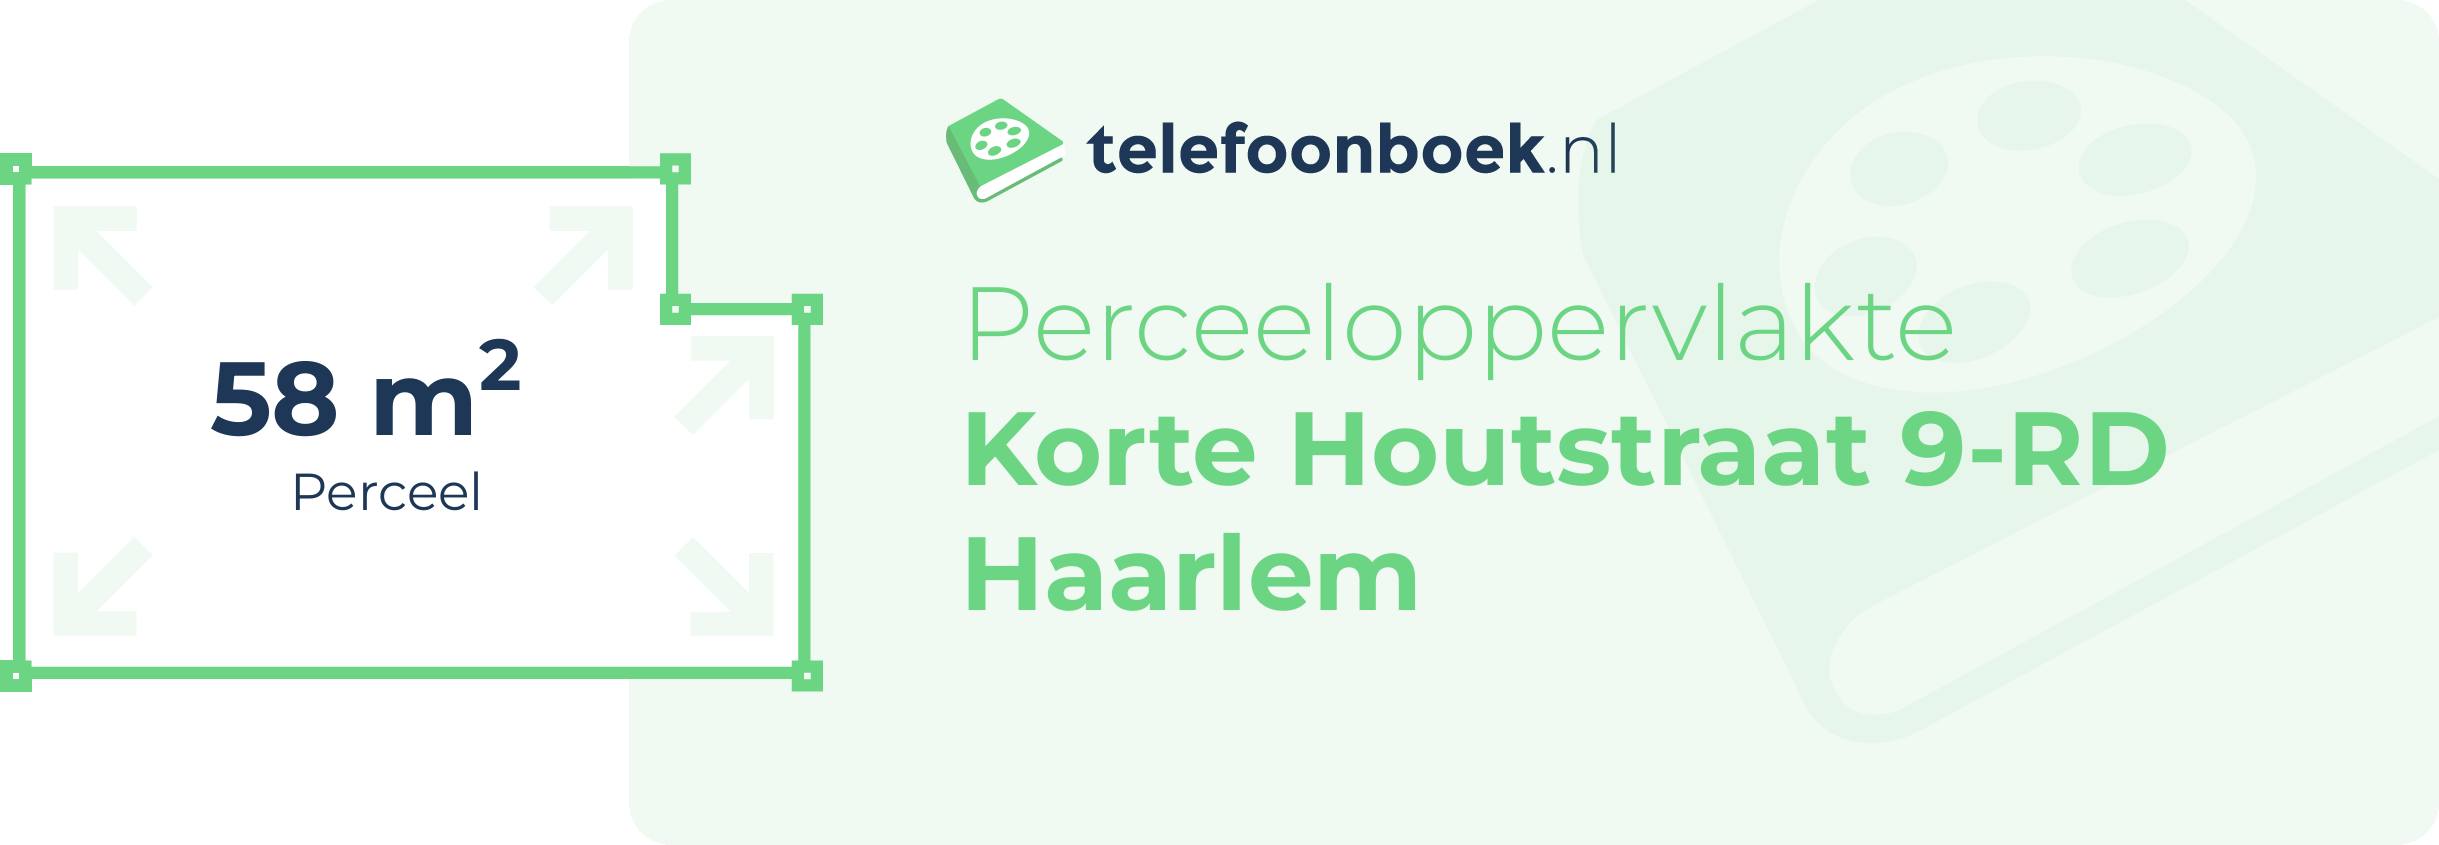 Perceeloppervlakte Korte Houtstraat 9-RD Haarlem